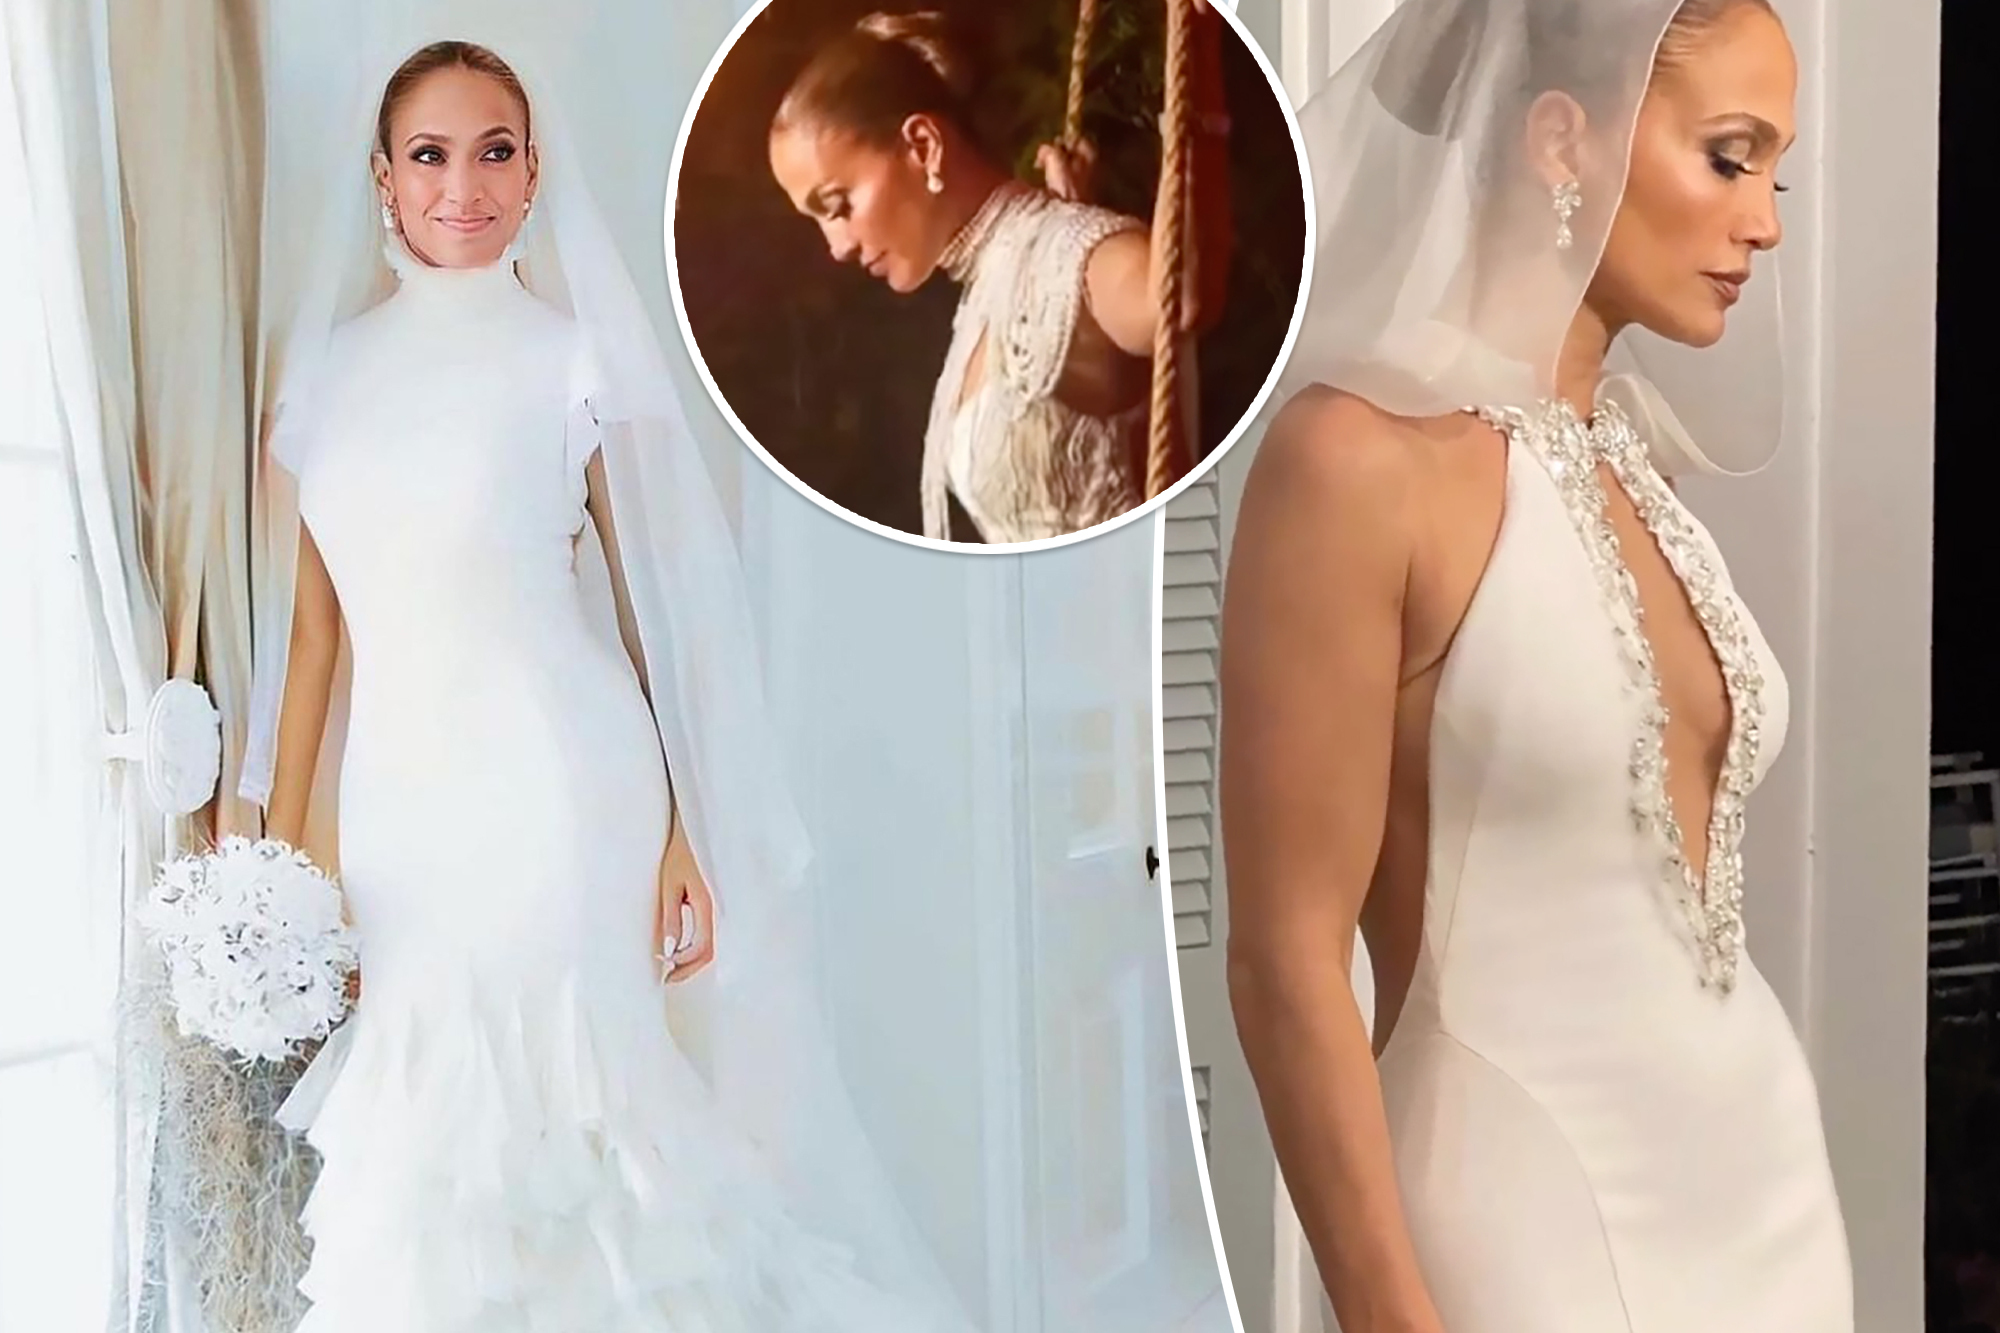 Jennifer lopez shows off her wedding dress tailored by ralph lauren